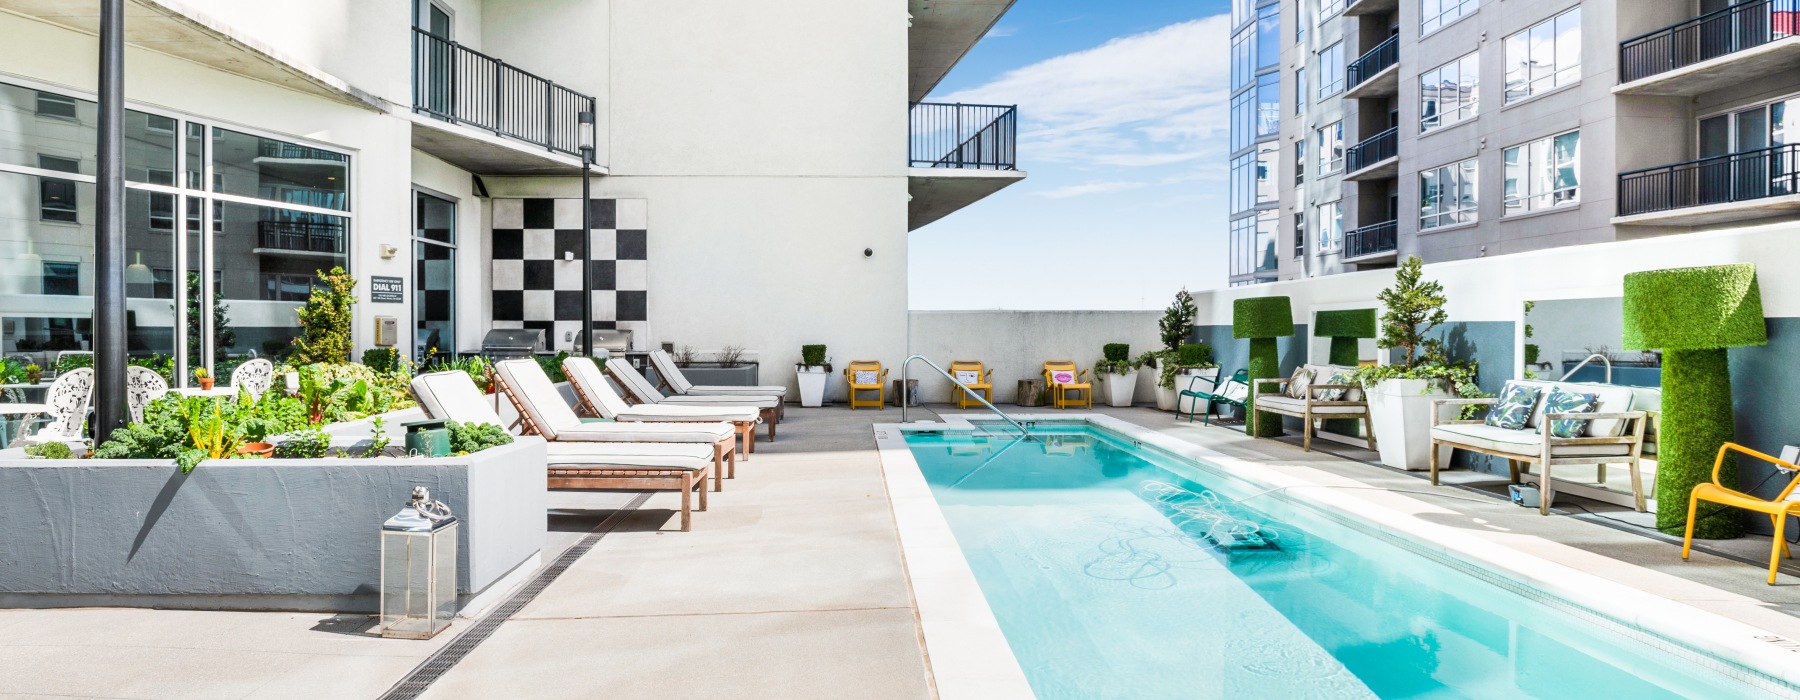 Resort style swimming pool with modern lounge furniture